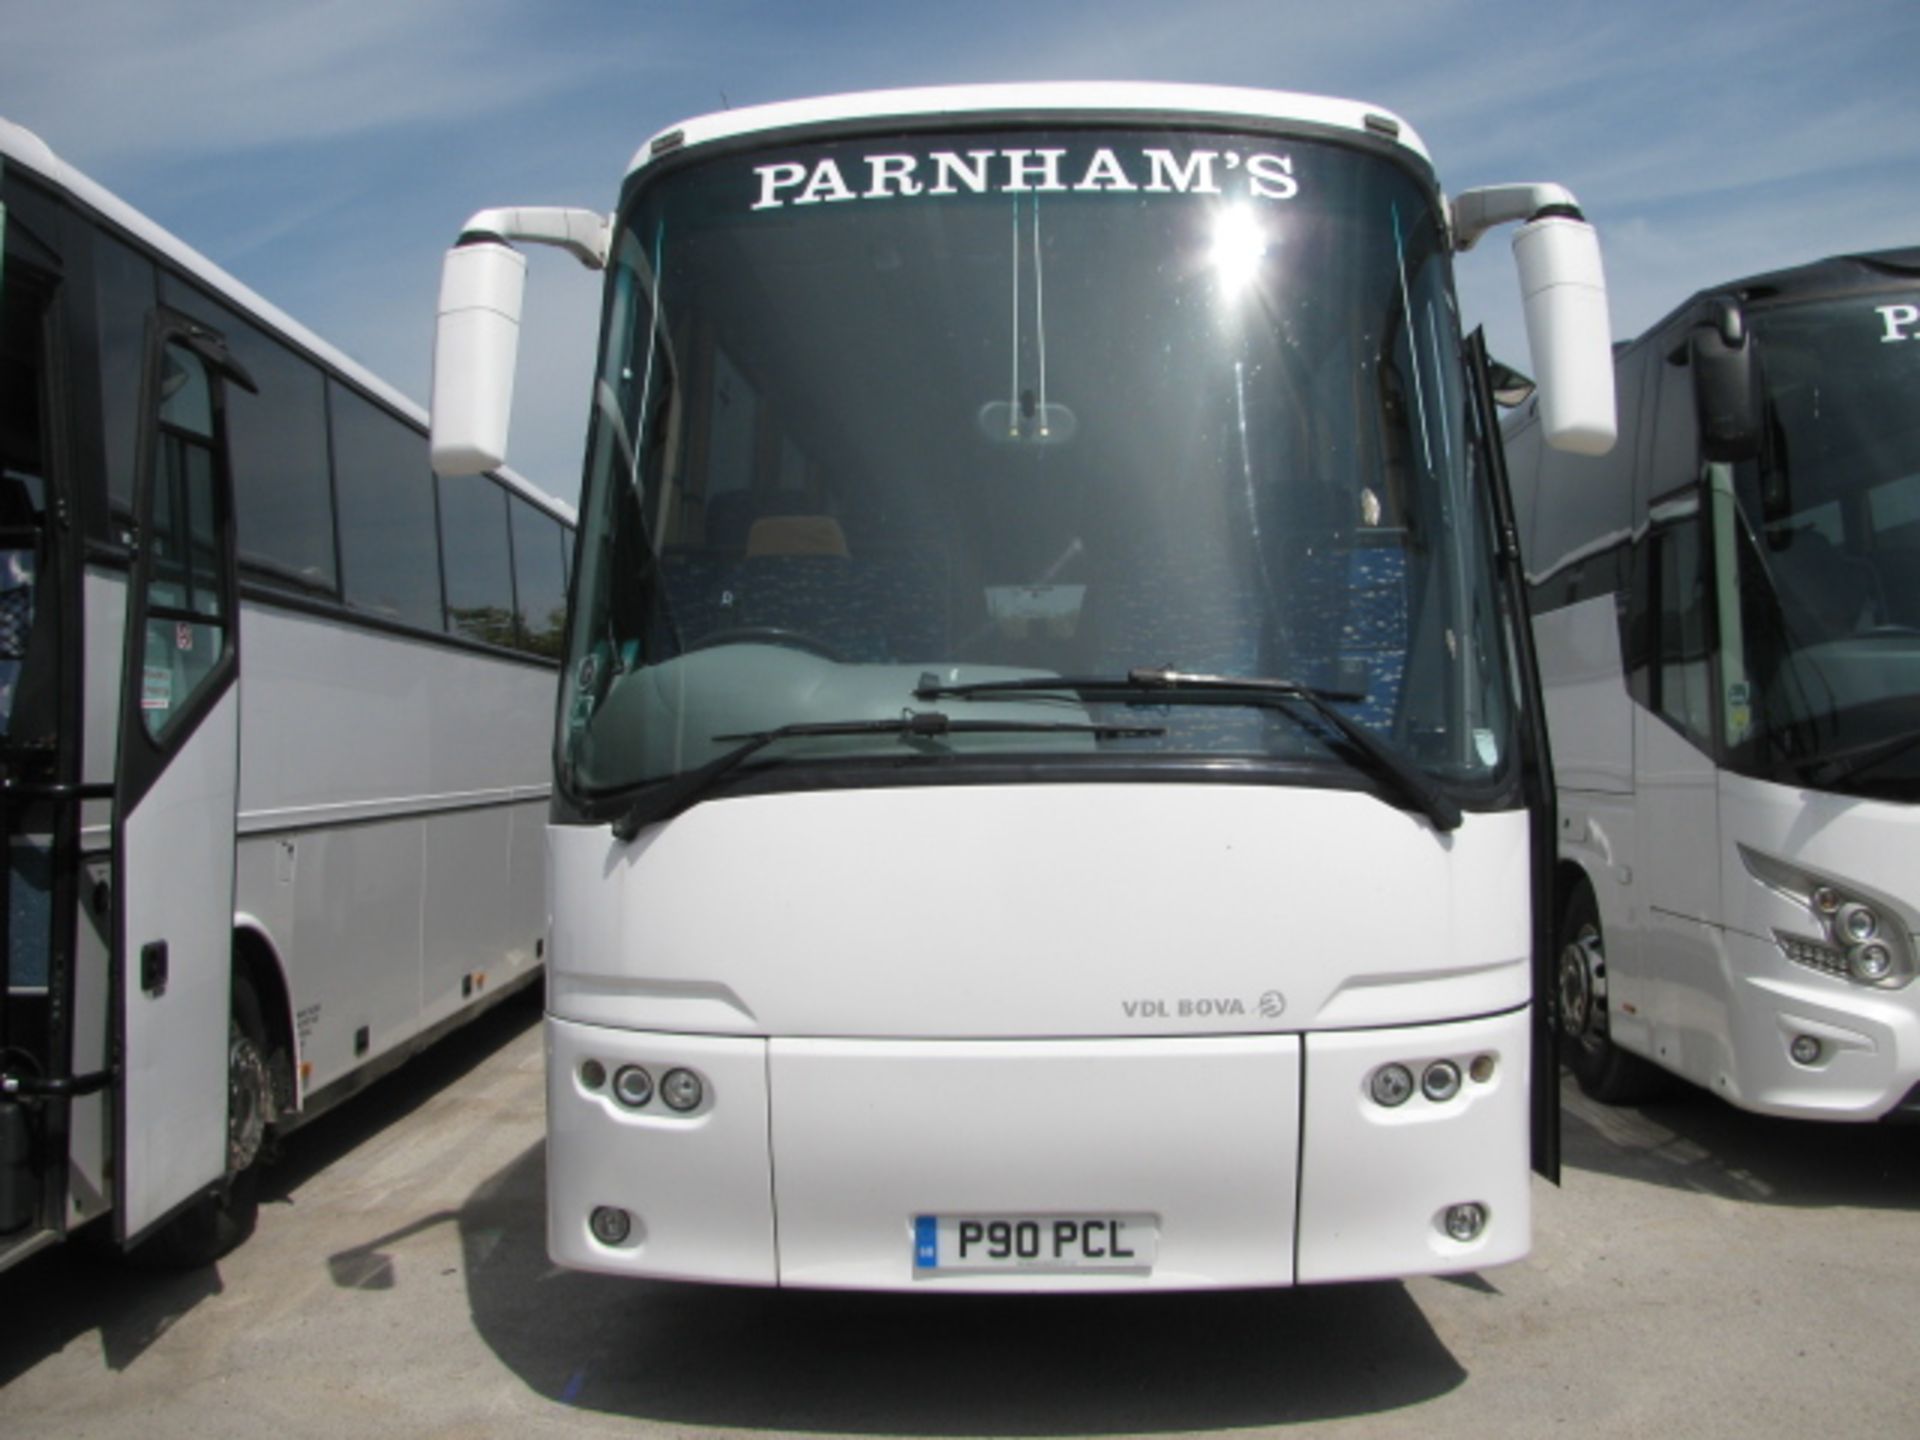 VDL Bova Futura FHD127.365 highline integral luxury coach - Image 2 of 15